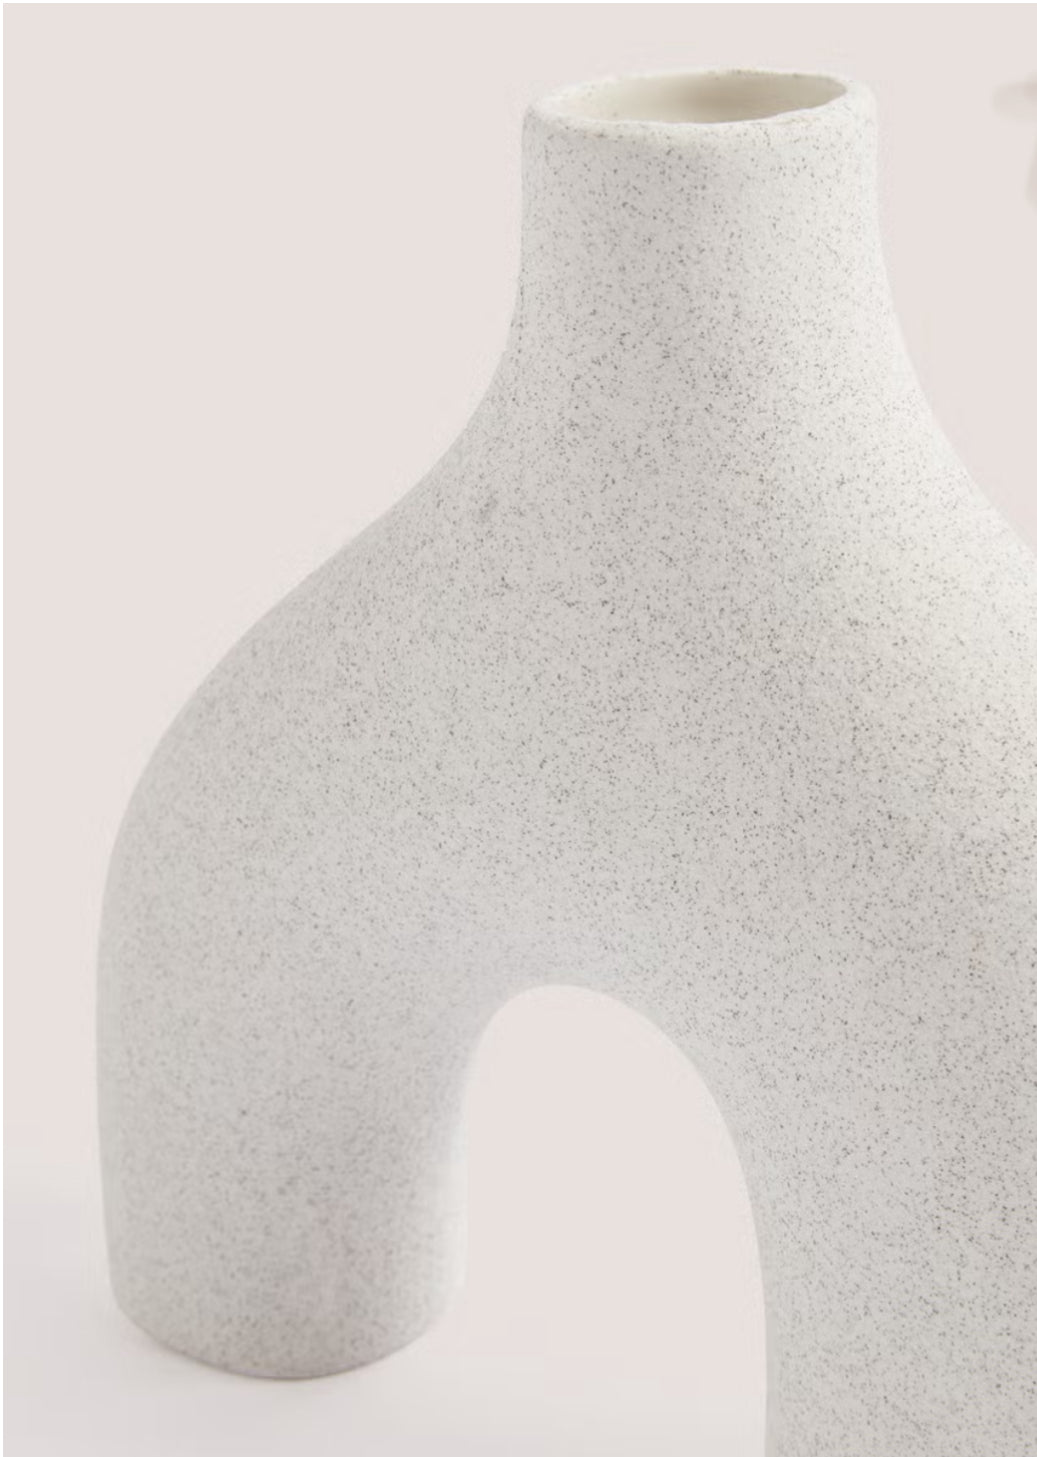 White Organic Vase